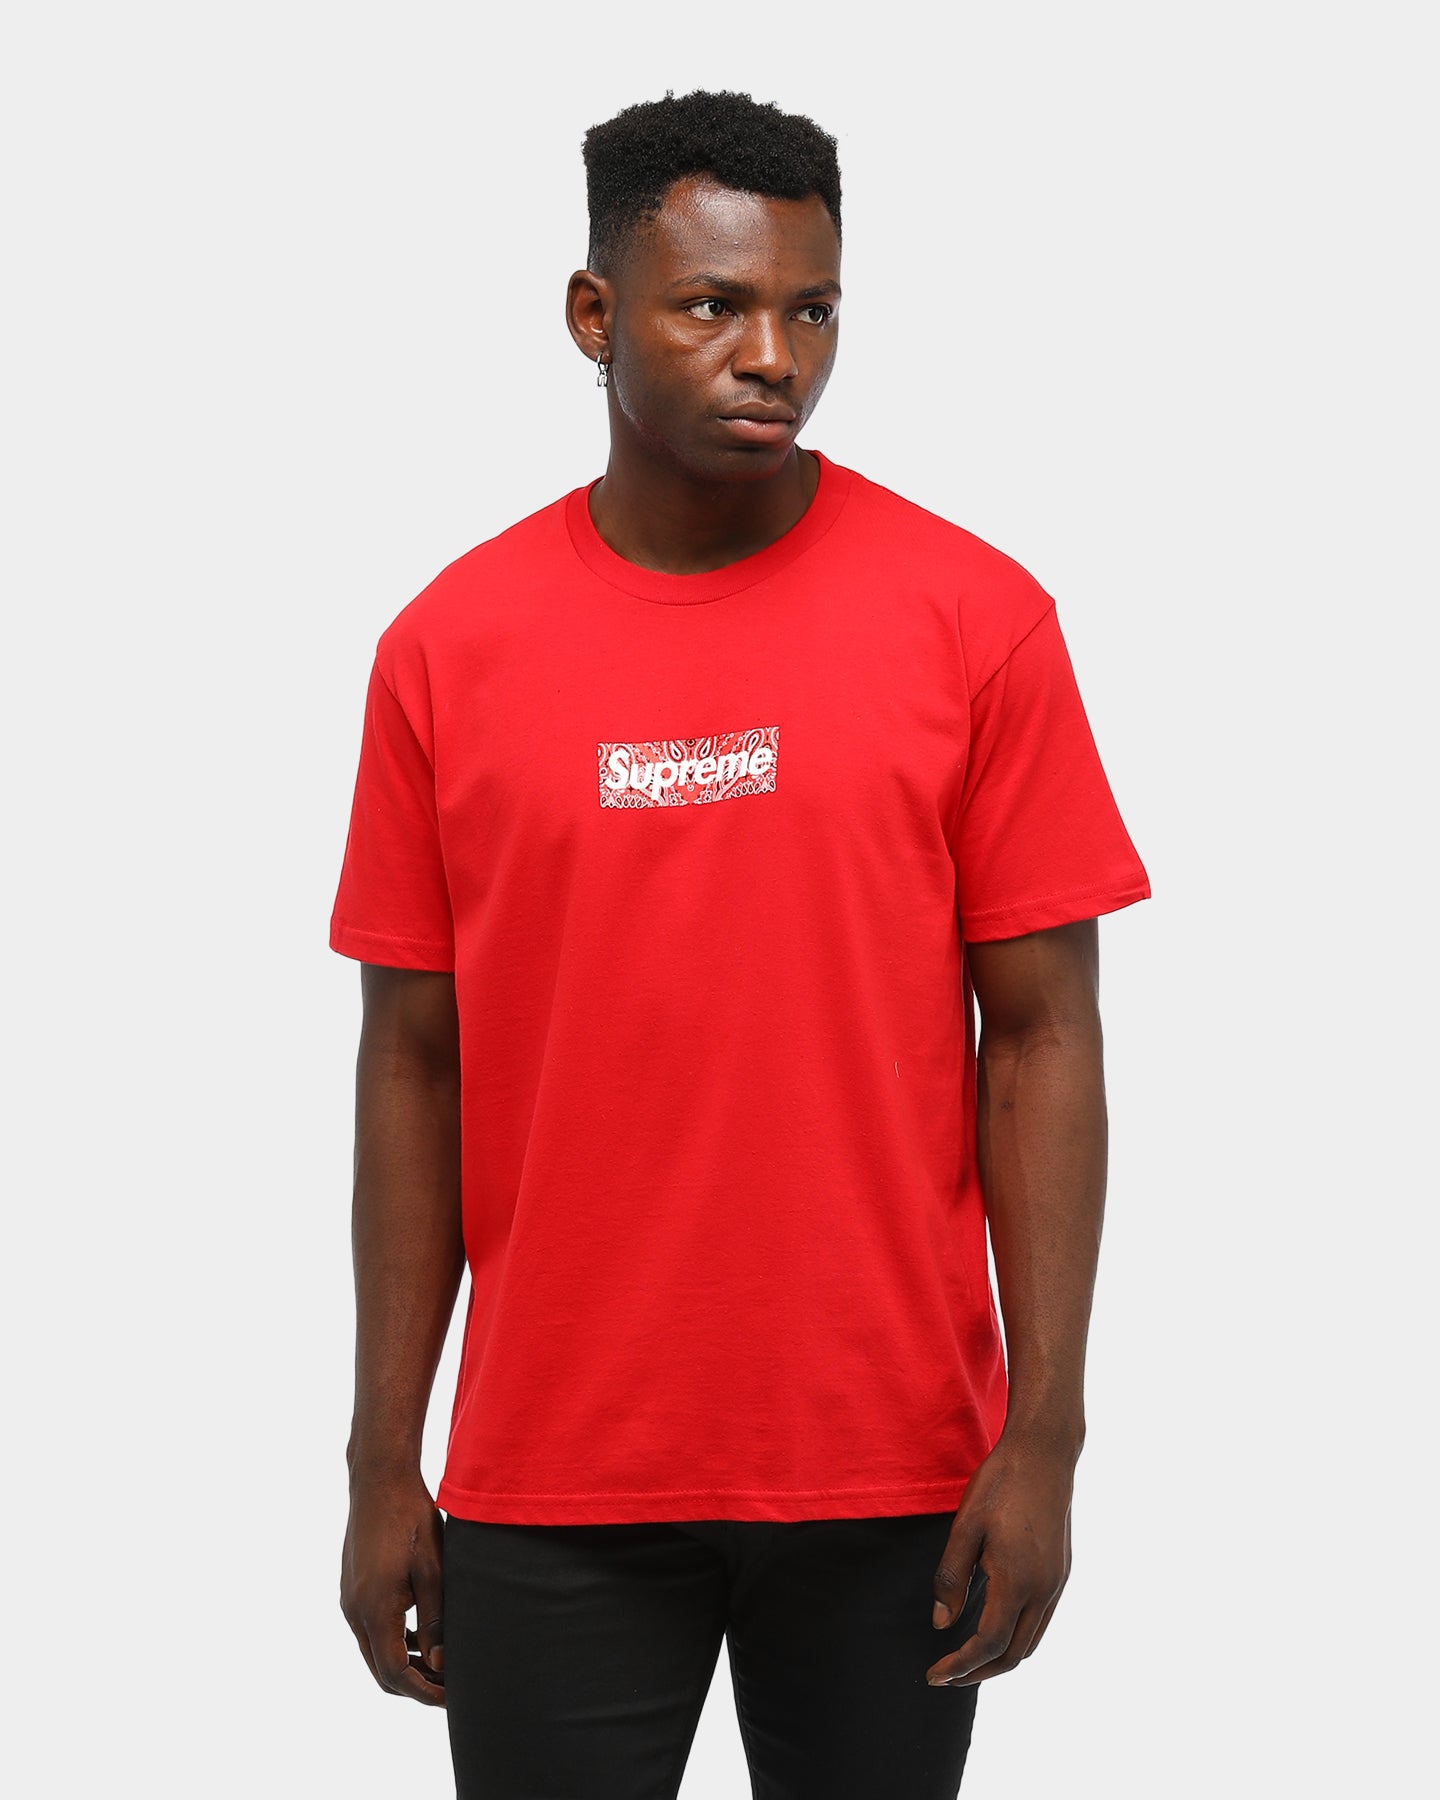 supreme red logo t shirt